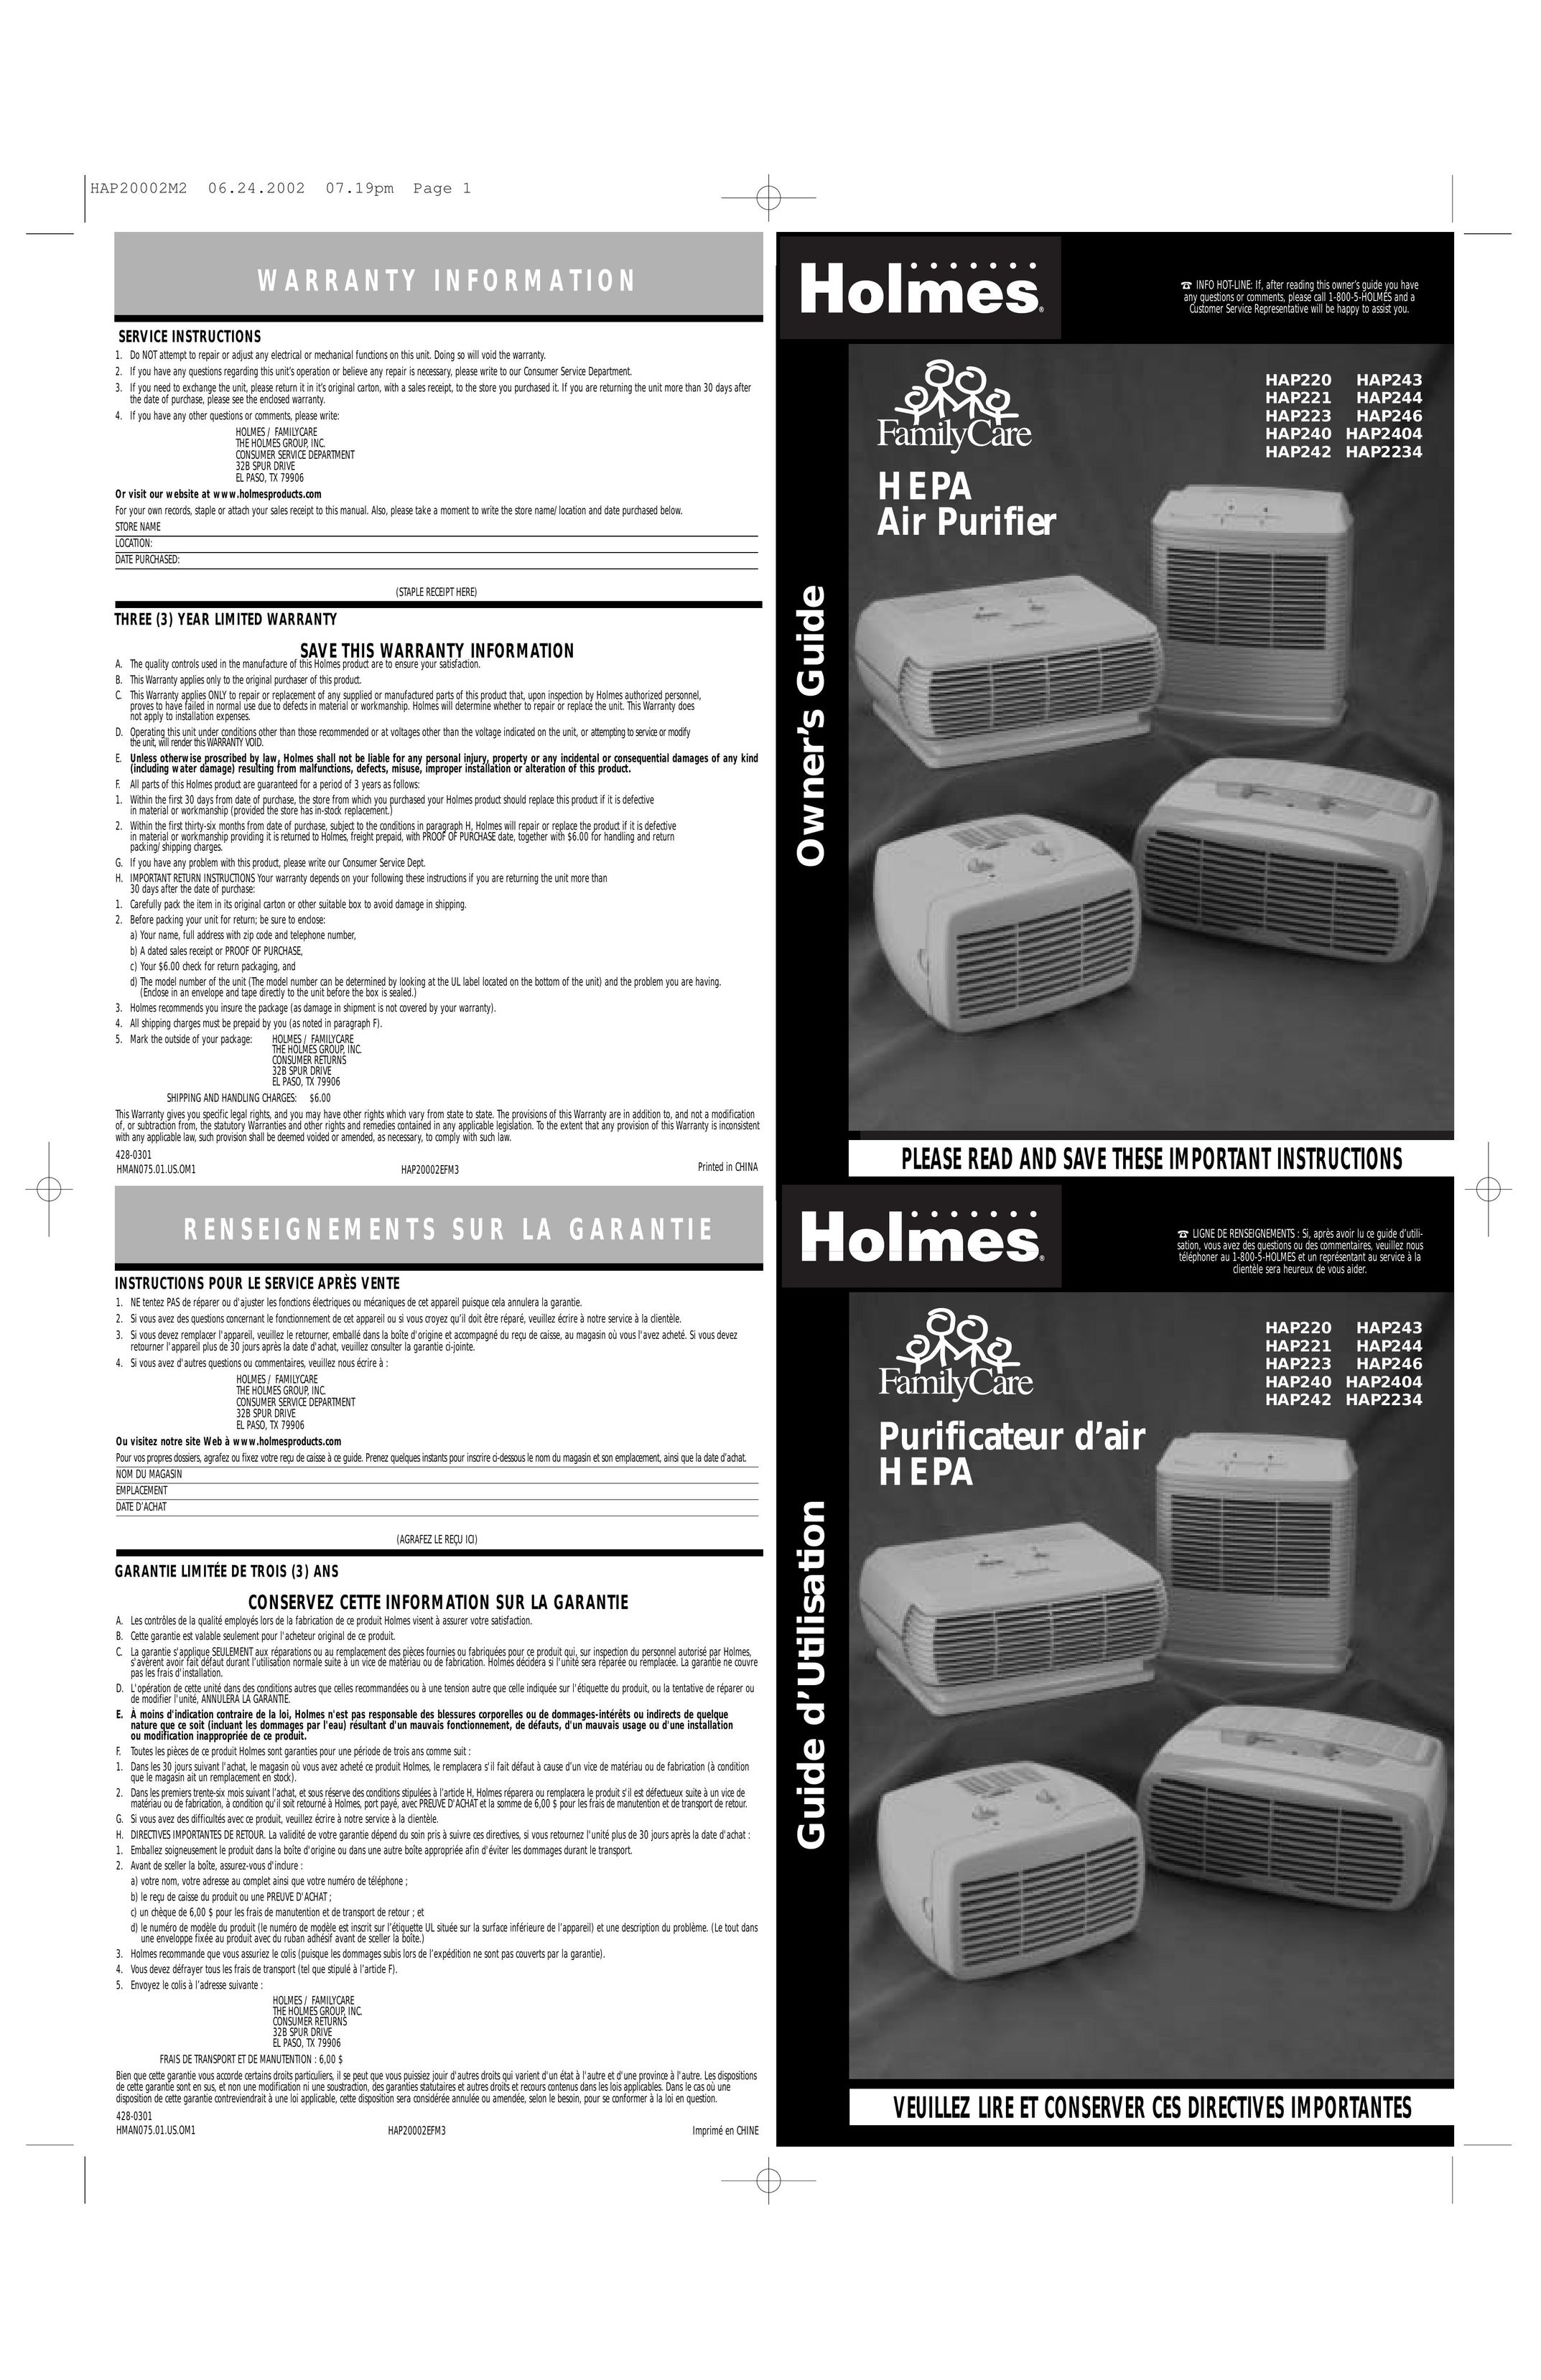 Holmes HAP220 Air Cleaner User Manual